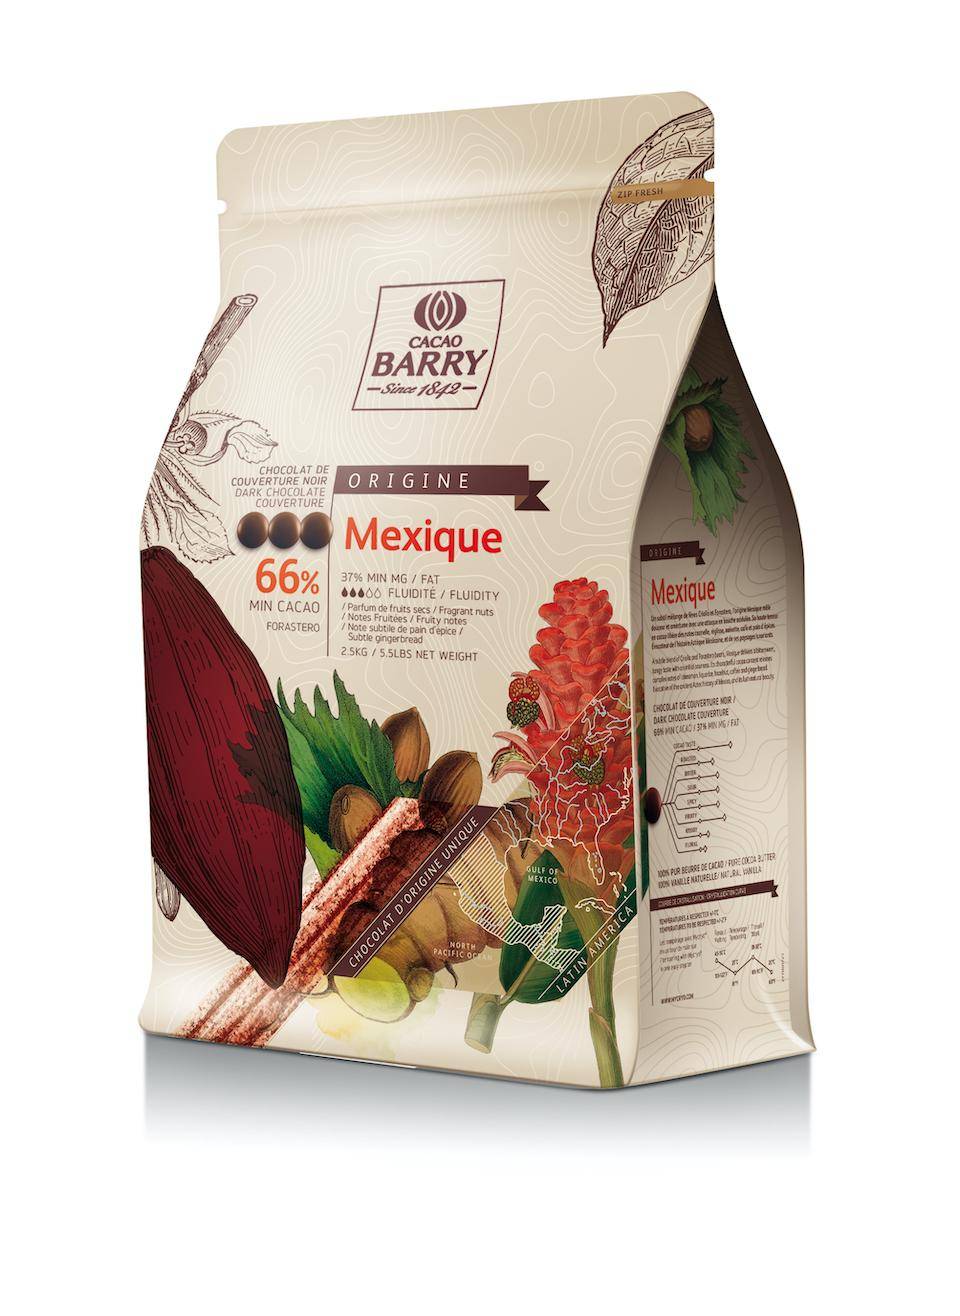 Packshot of 2.5kg bag of Cacao Barry® Mexique couverture